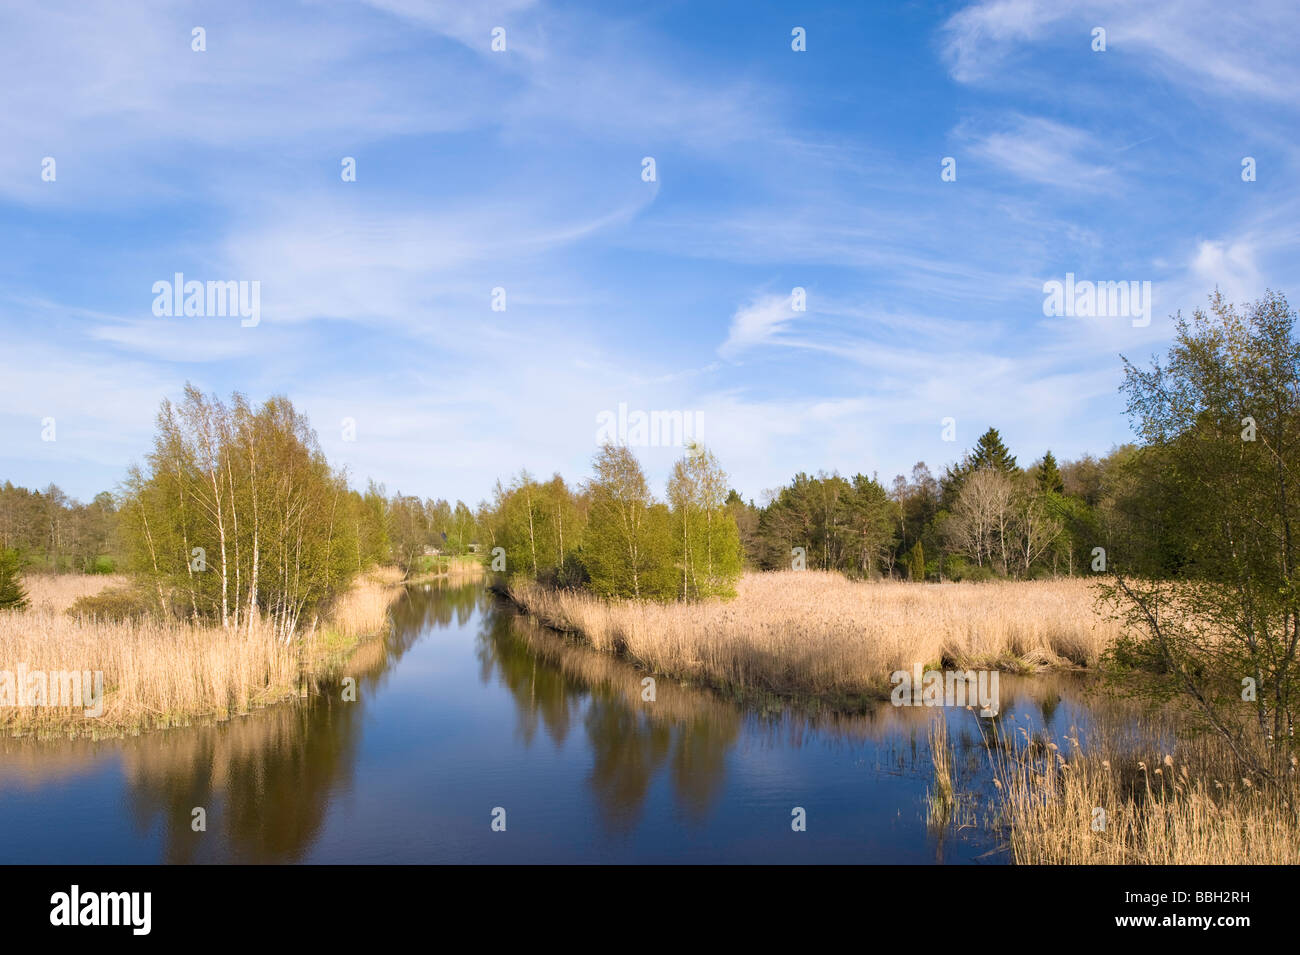 Hiesige Landschaft Aland-Finnland Stockfoto